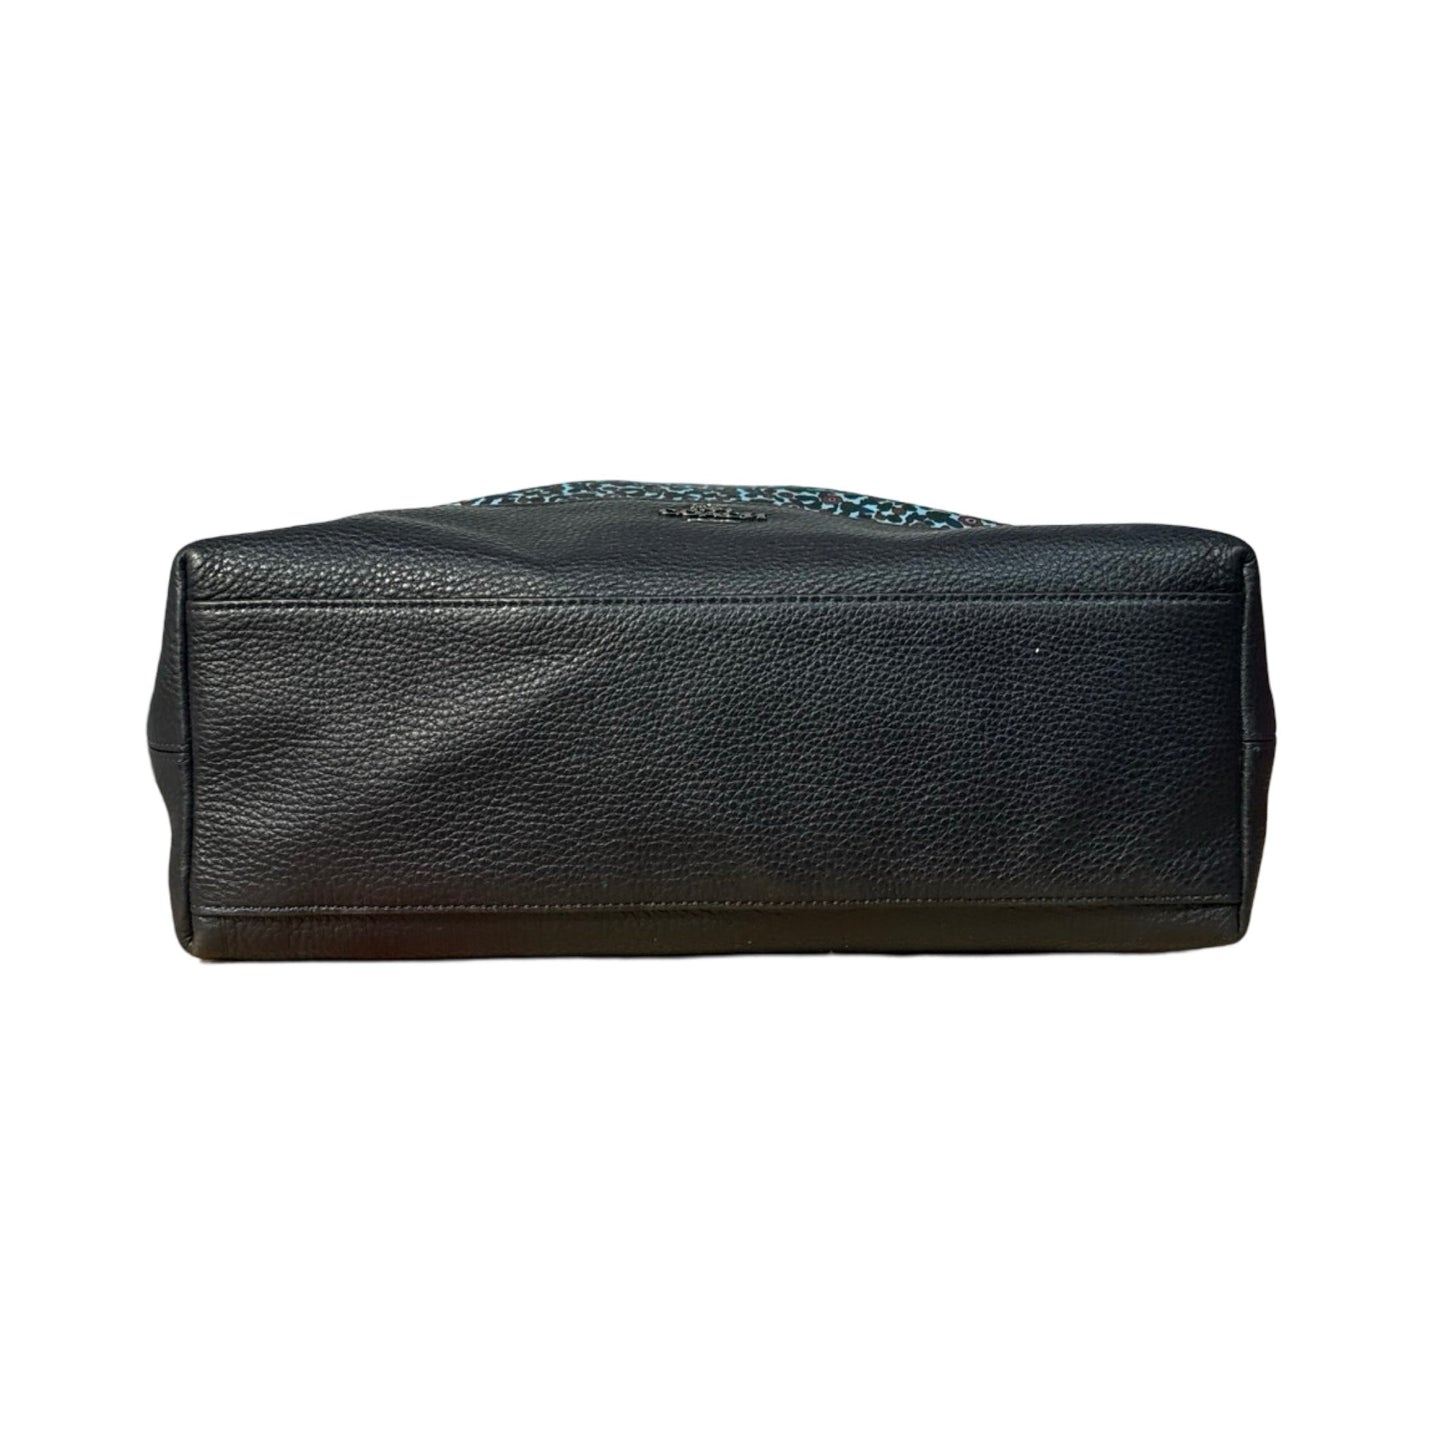 NWT Blue & Black Multicolored Handbag Coach, Size Large